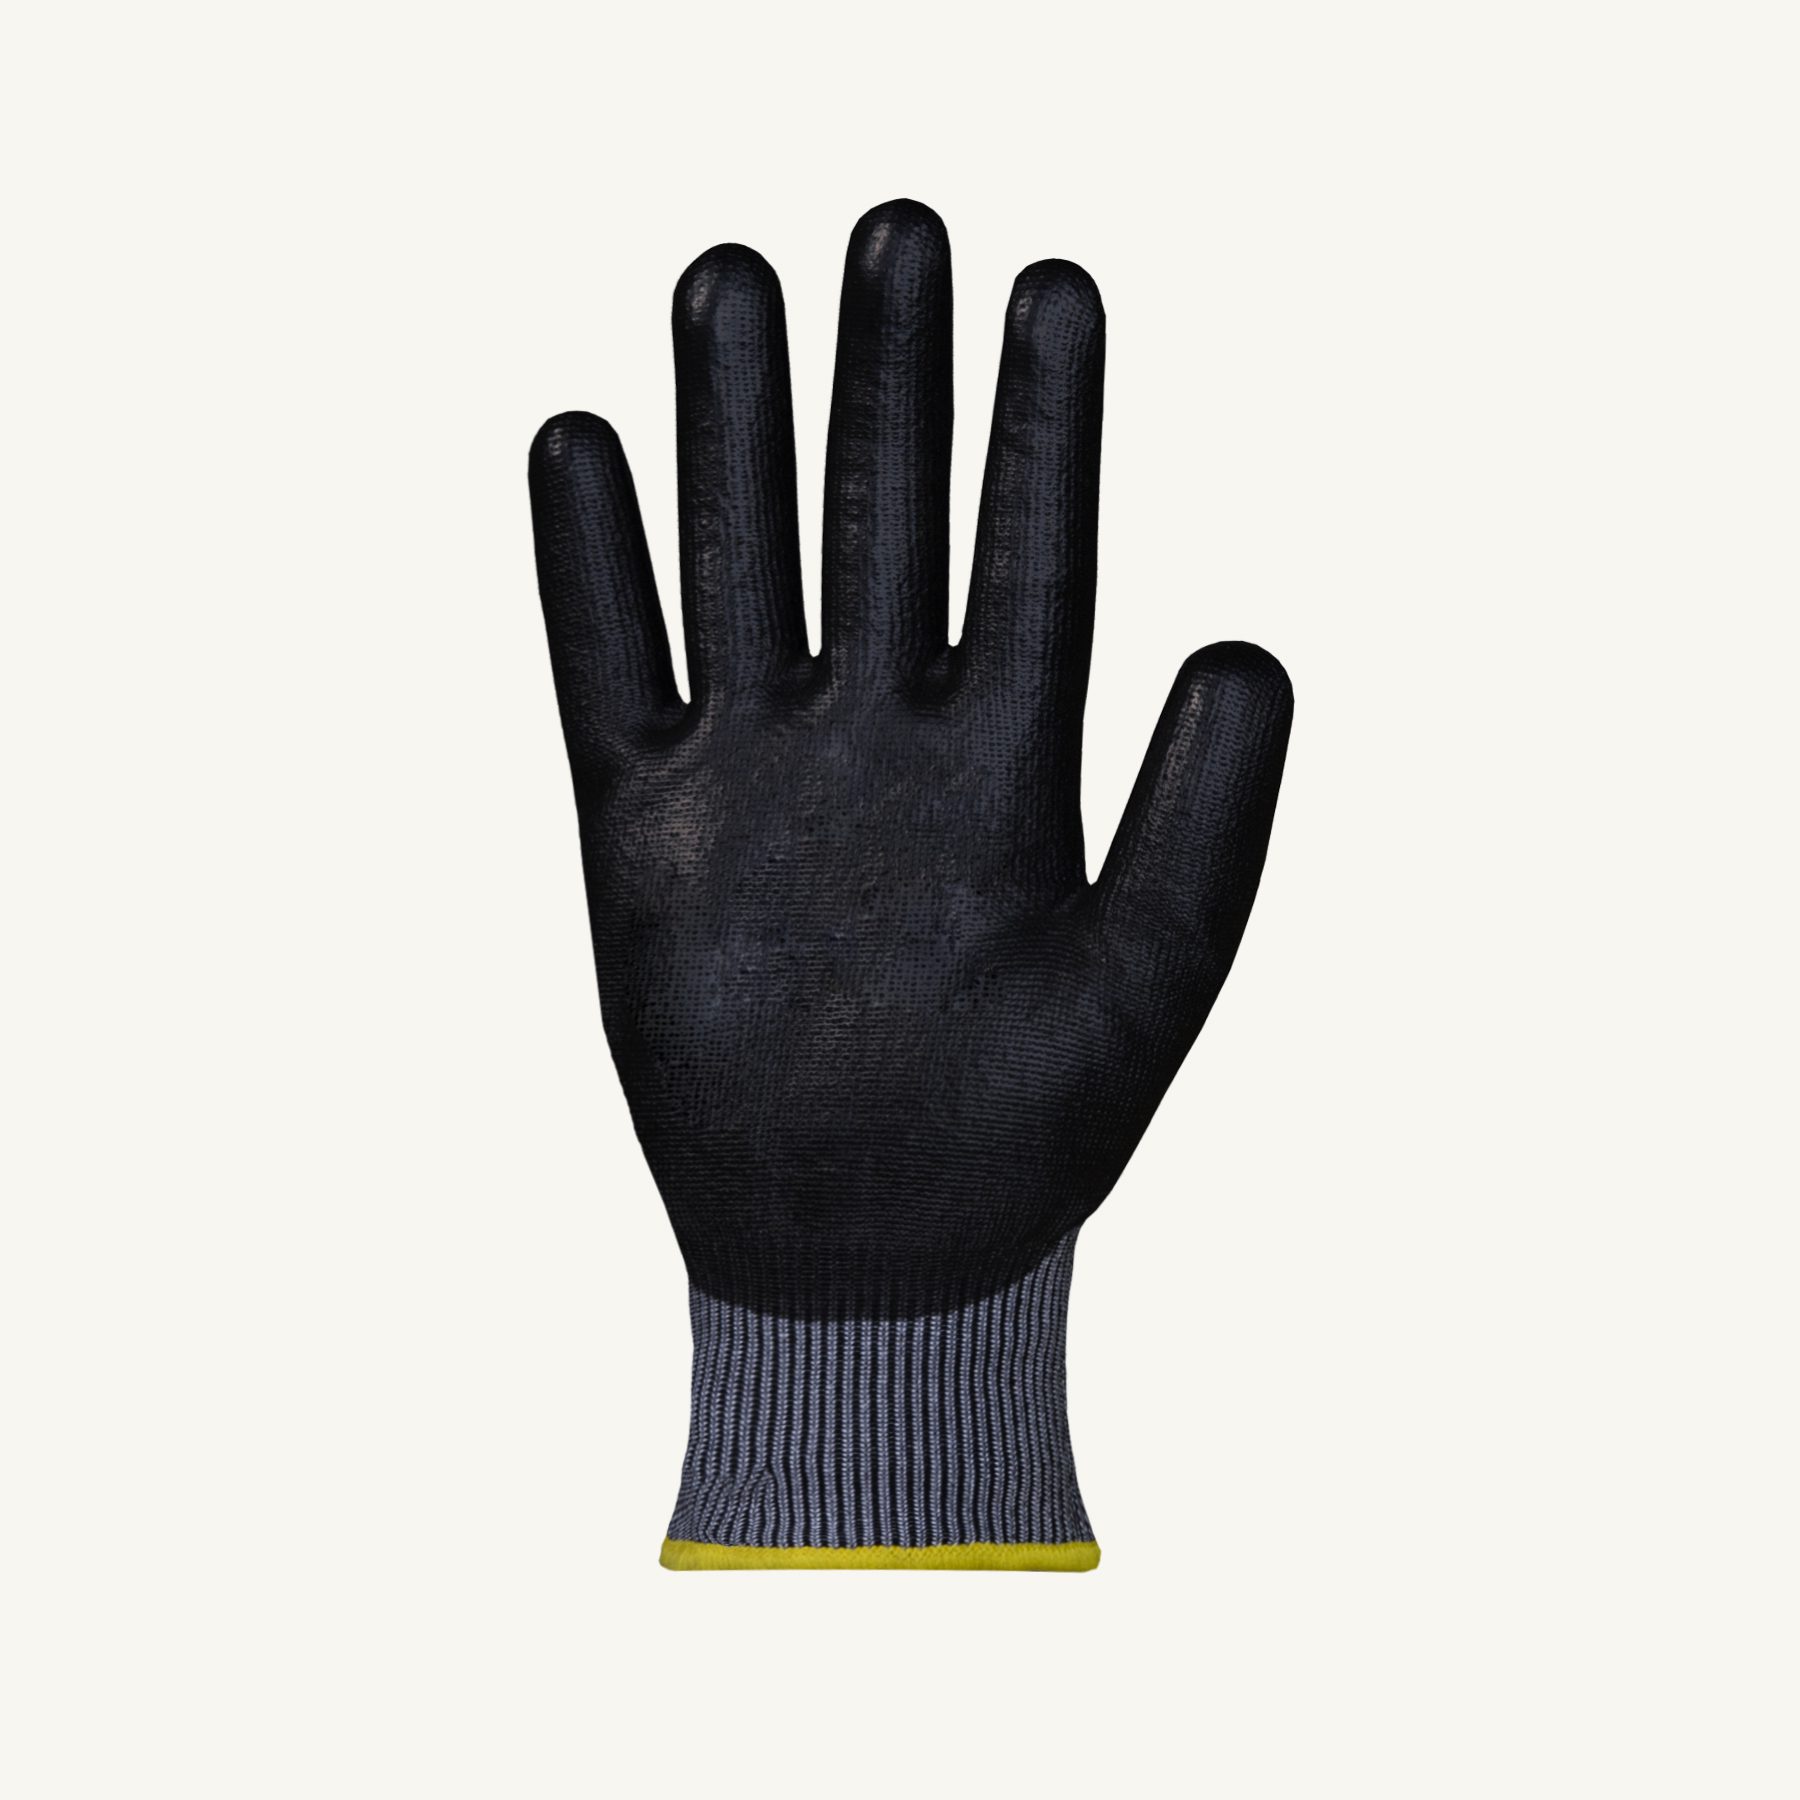 S18TAXPUE glove palm